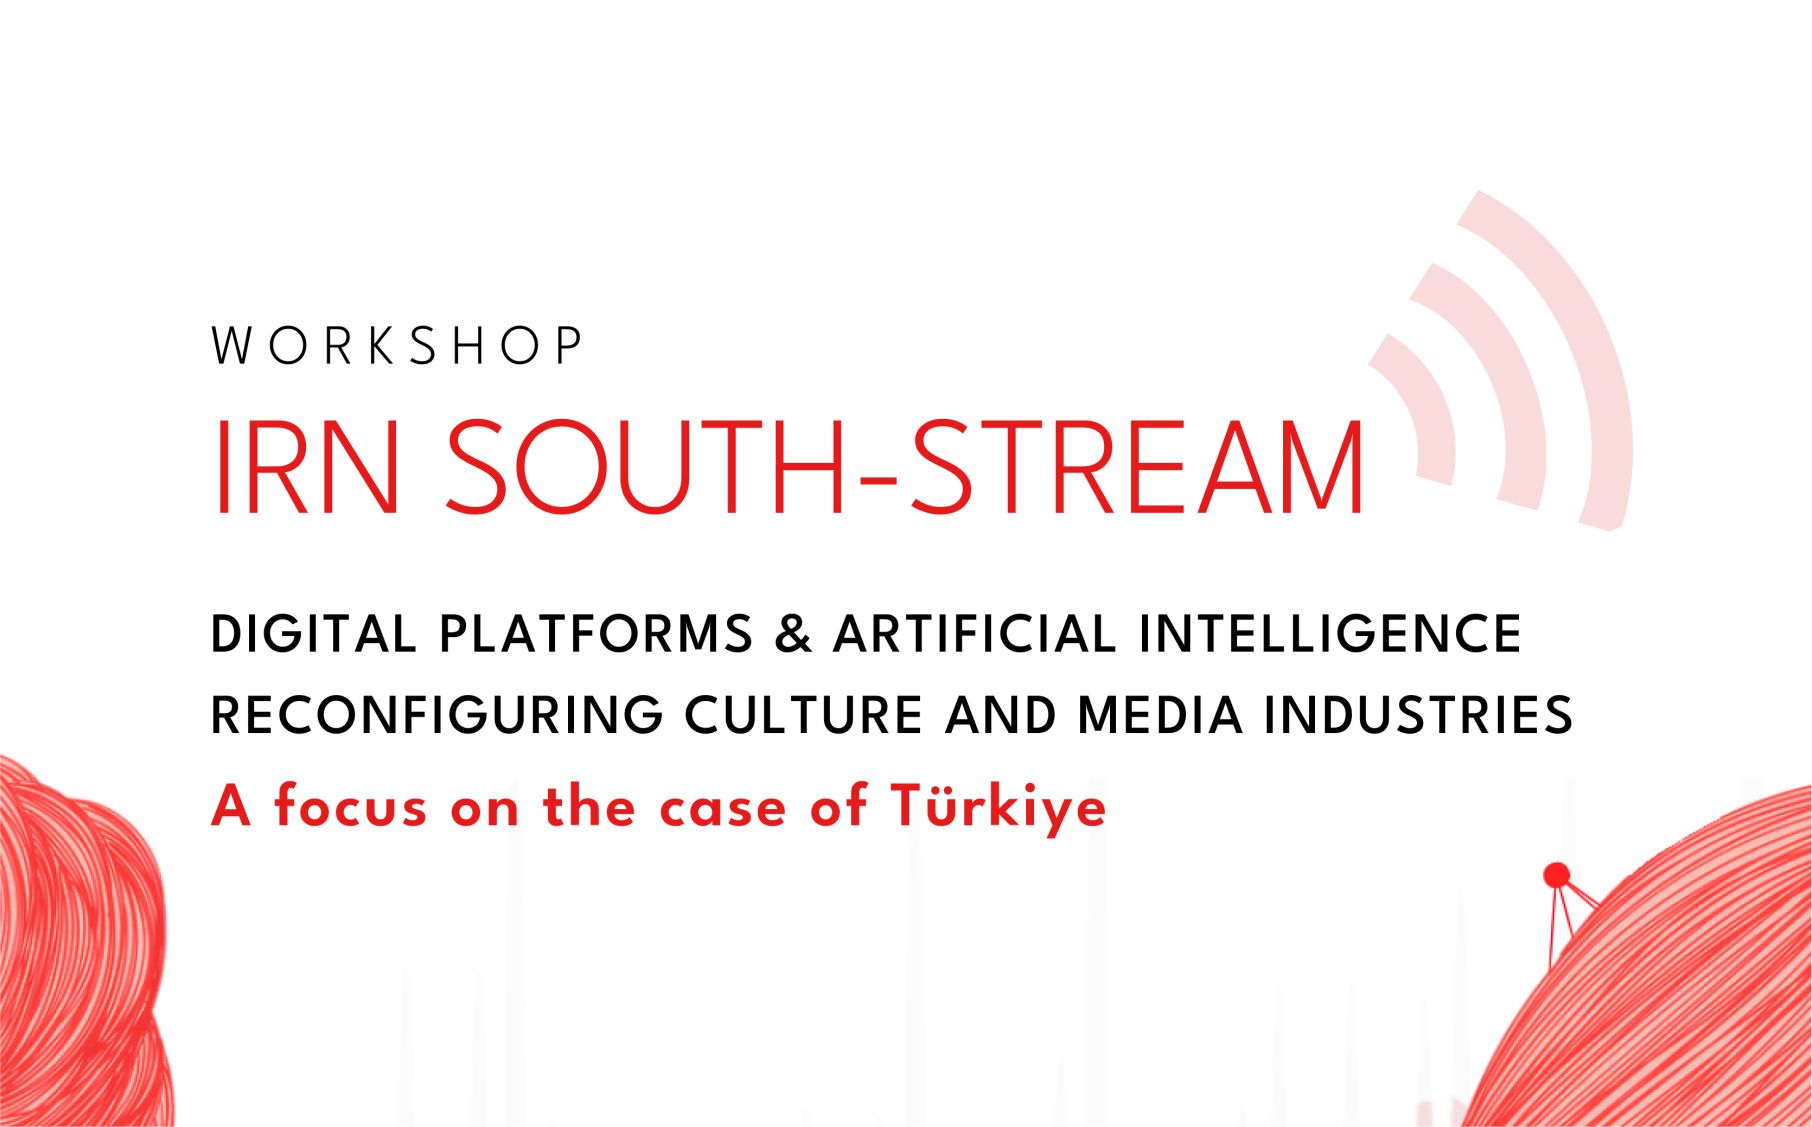 Digital Platforms & Artificial Intelligence: Reconfiguring Culture and Media Industries duyuru görseli